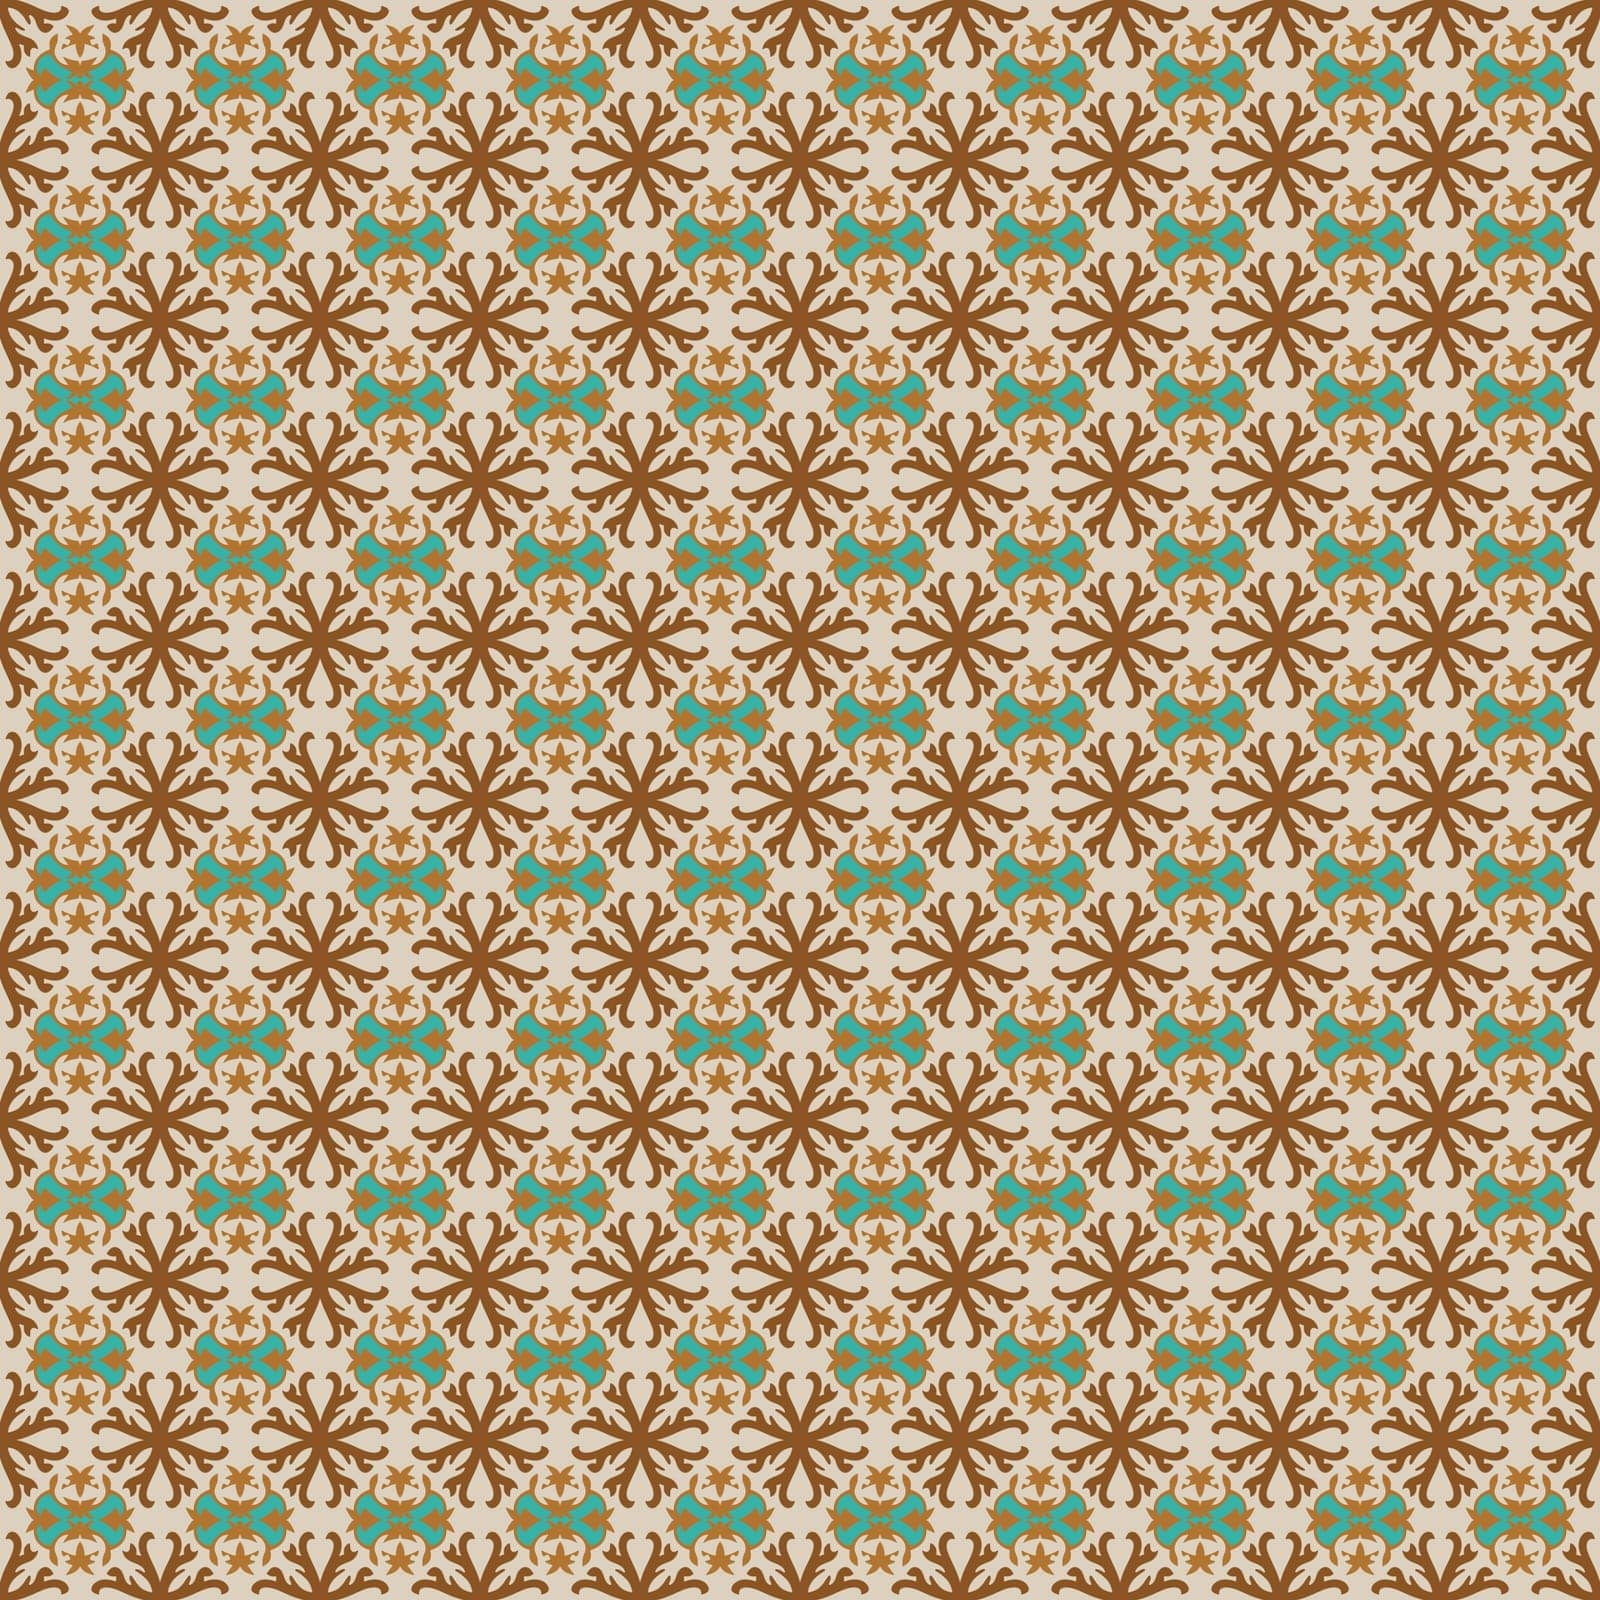 Seamless pattern texture. Repeat pattern. Vector illustration.